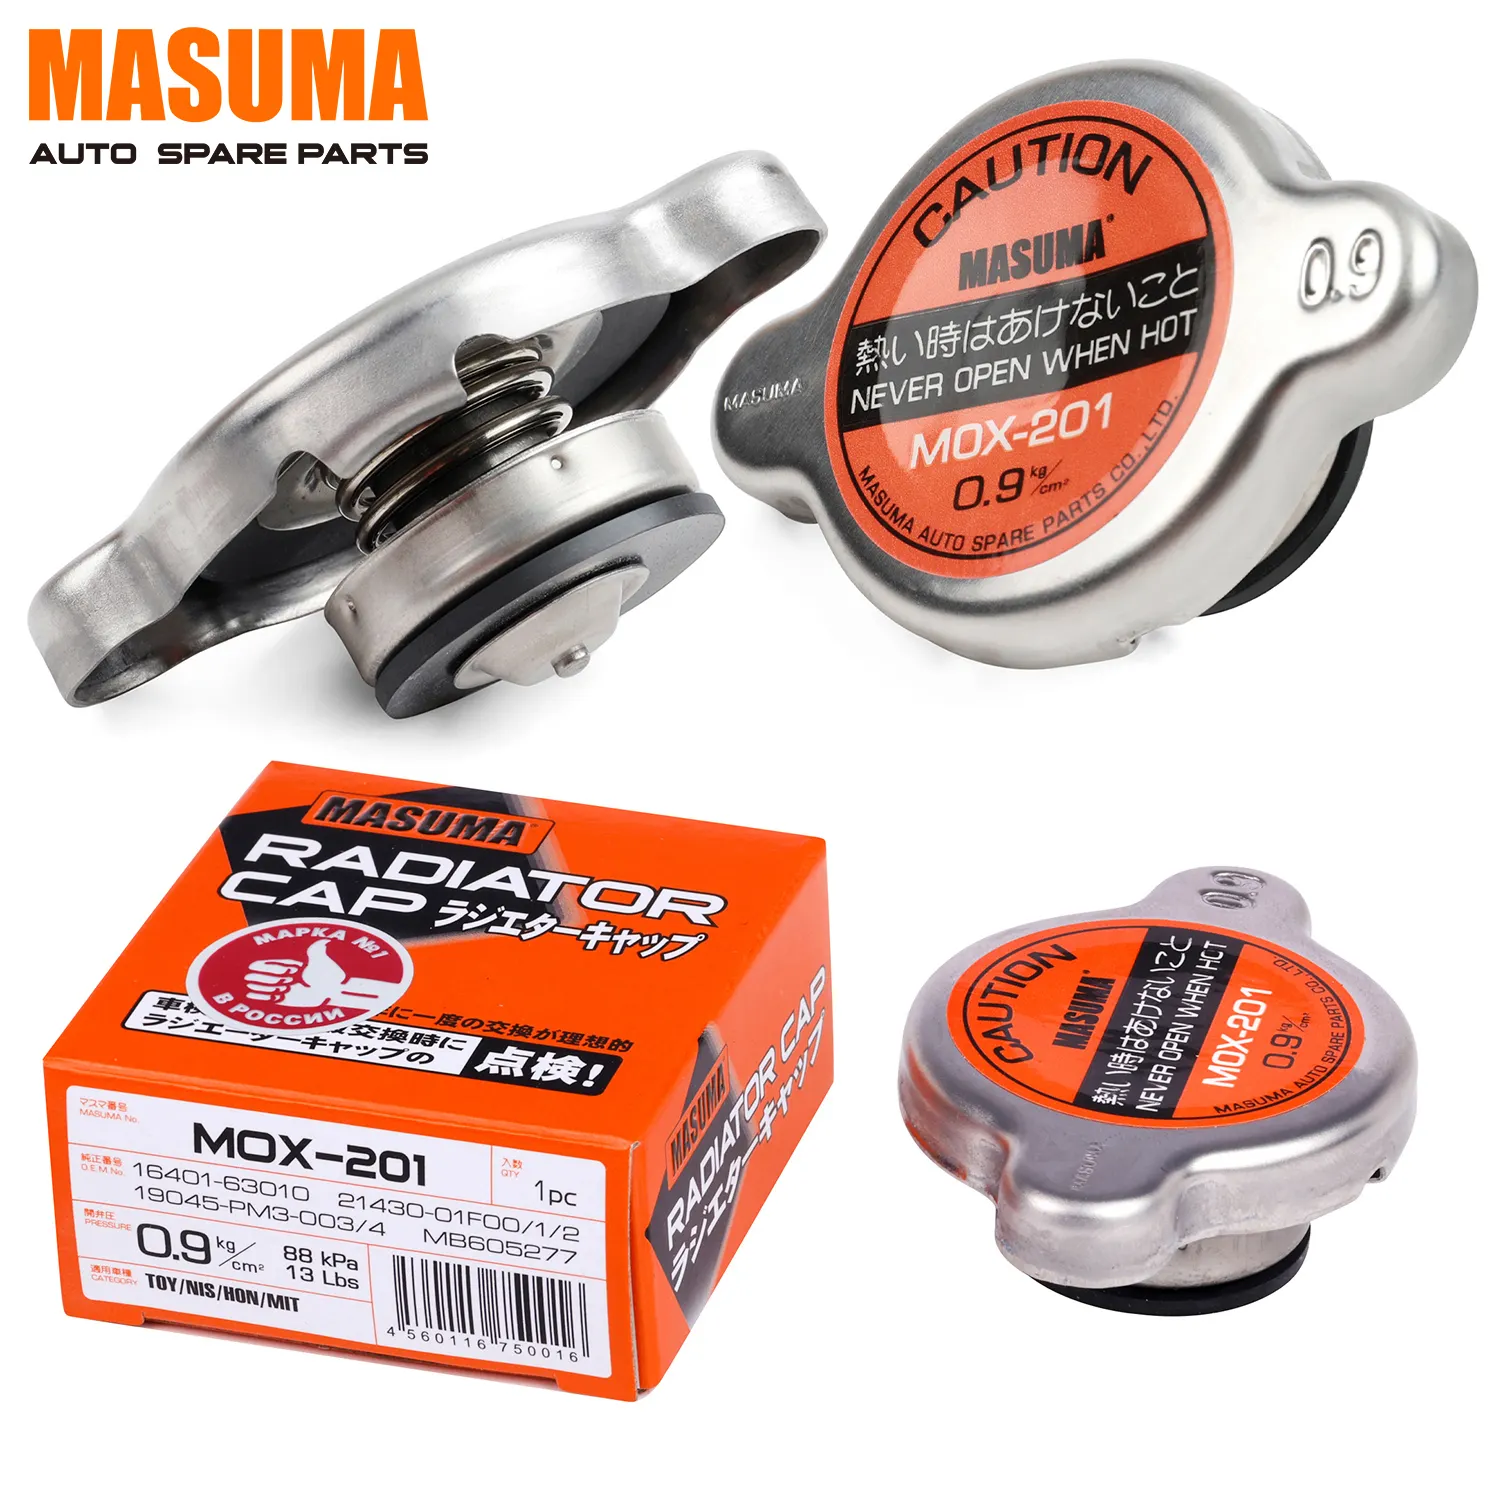 MOX-201 masuma bảo vệ dầu tản nhiệt cap 0225-10-144 16045-ke1-003 16401-15210 16401-50051 cho Mitsubishi Pajero